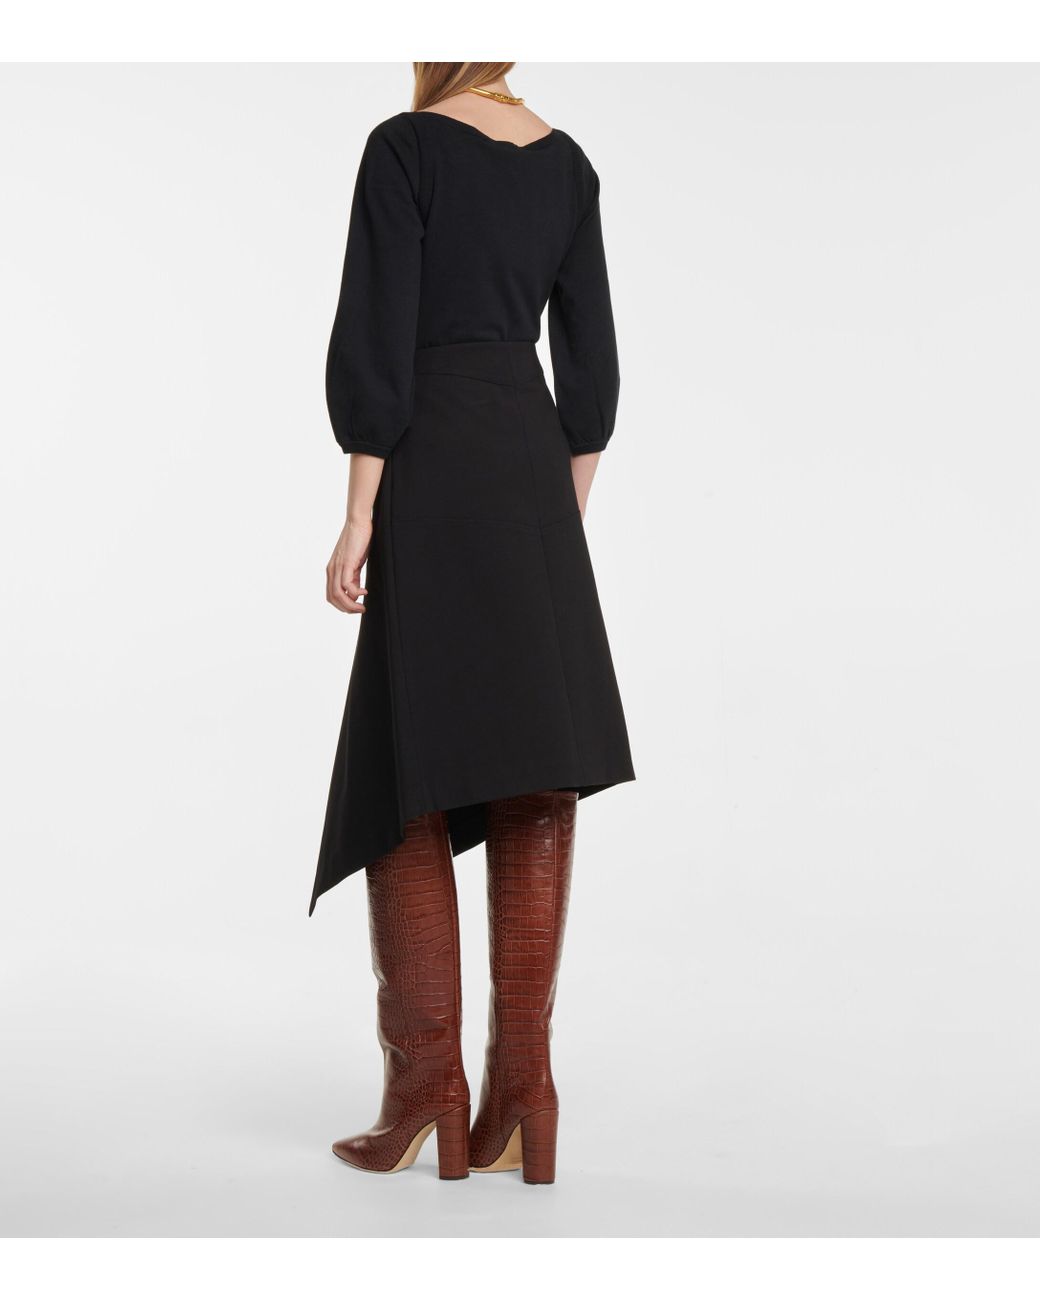 Dorothee Schumacher Synthetic Emotional Essence Asymmetric Wrap Skirt in  Black - Lyst